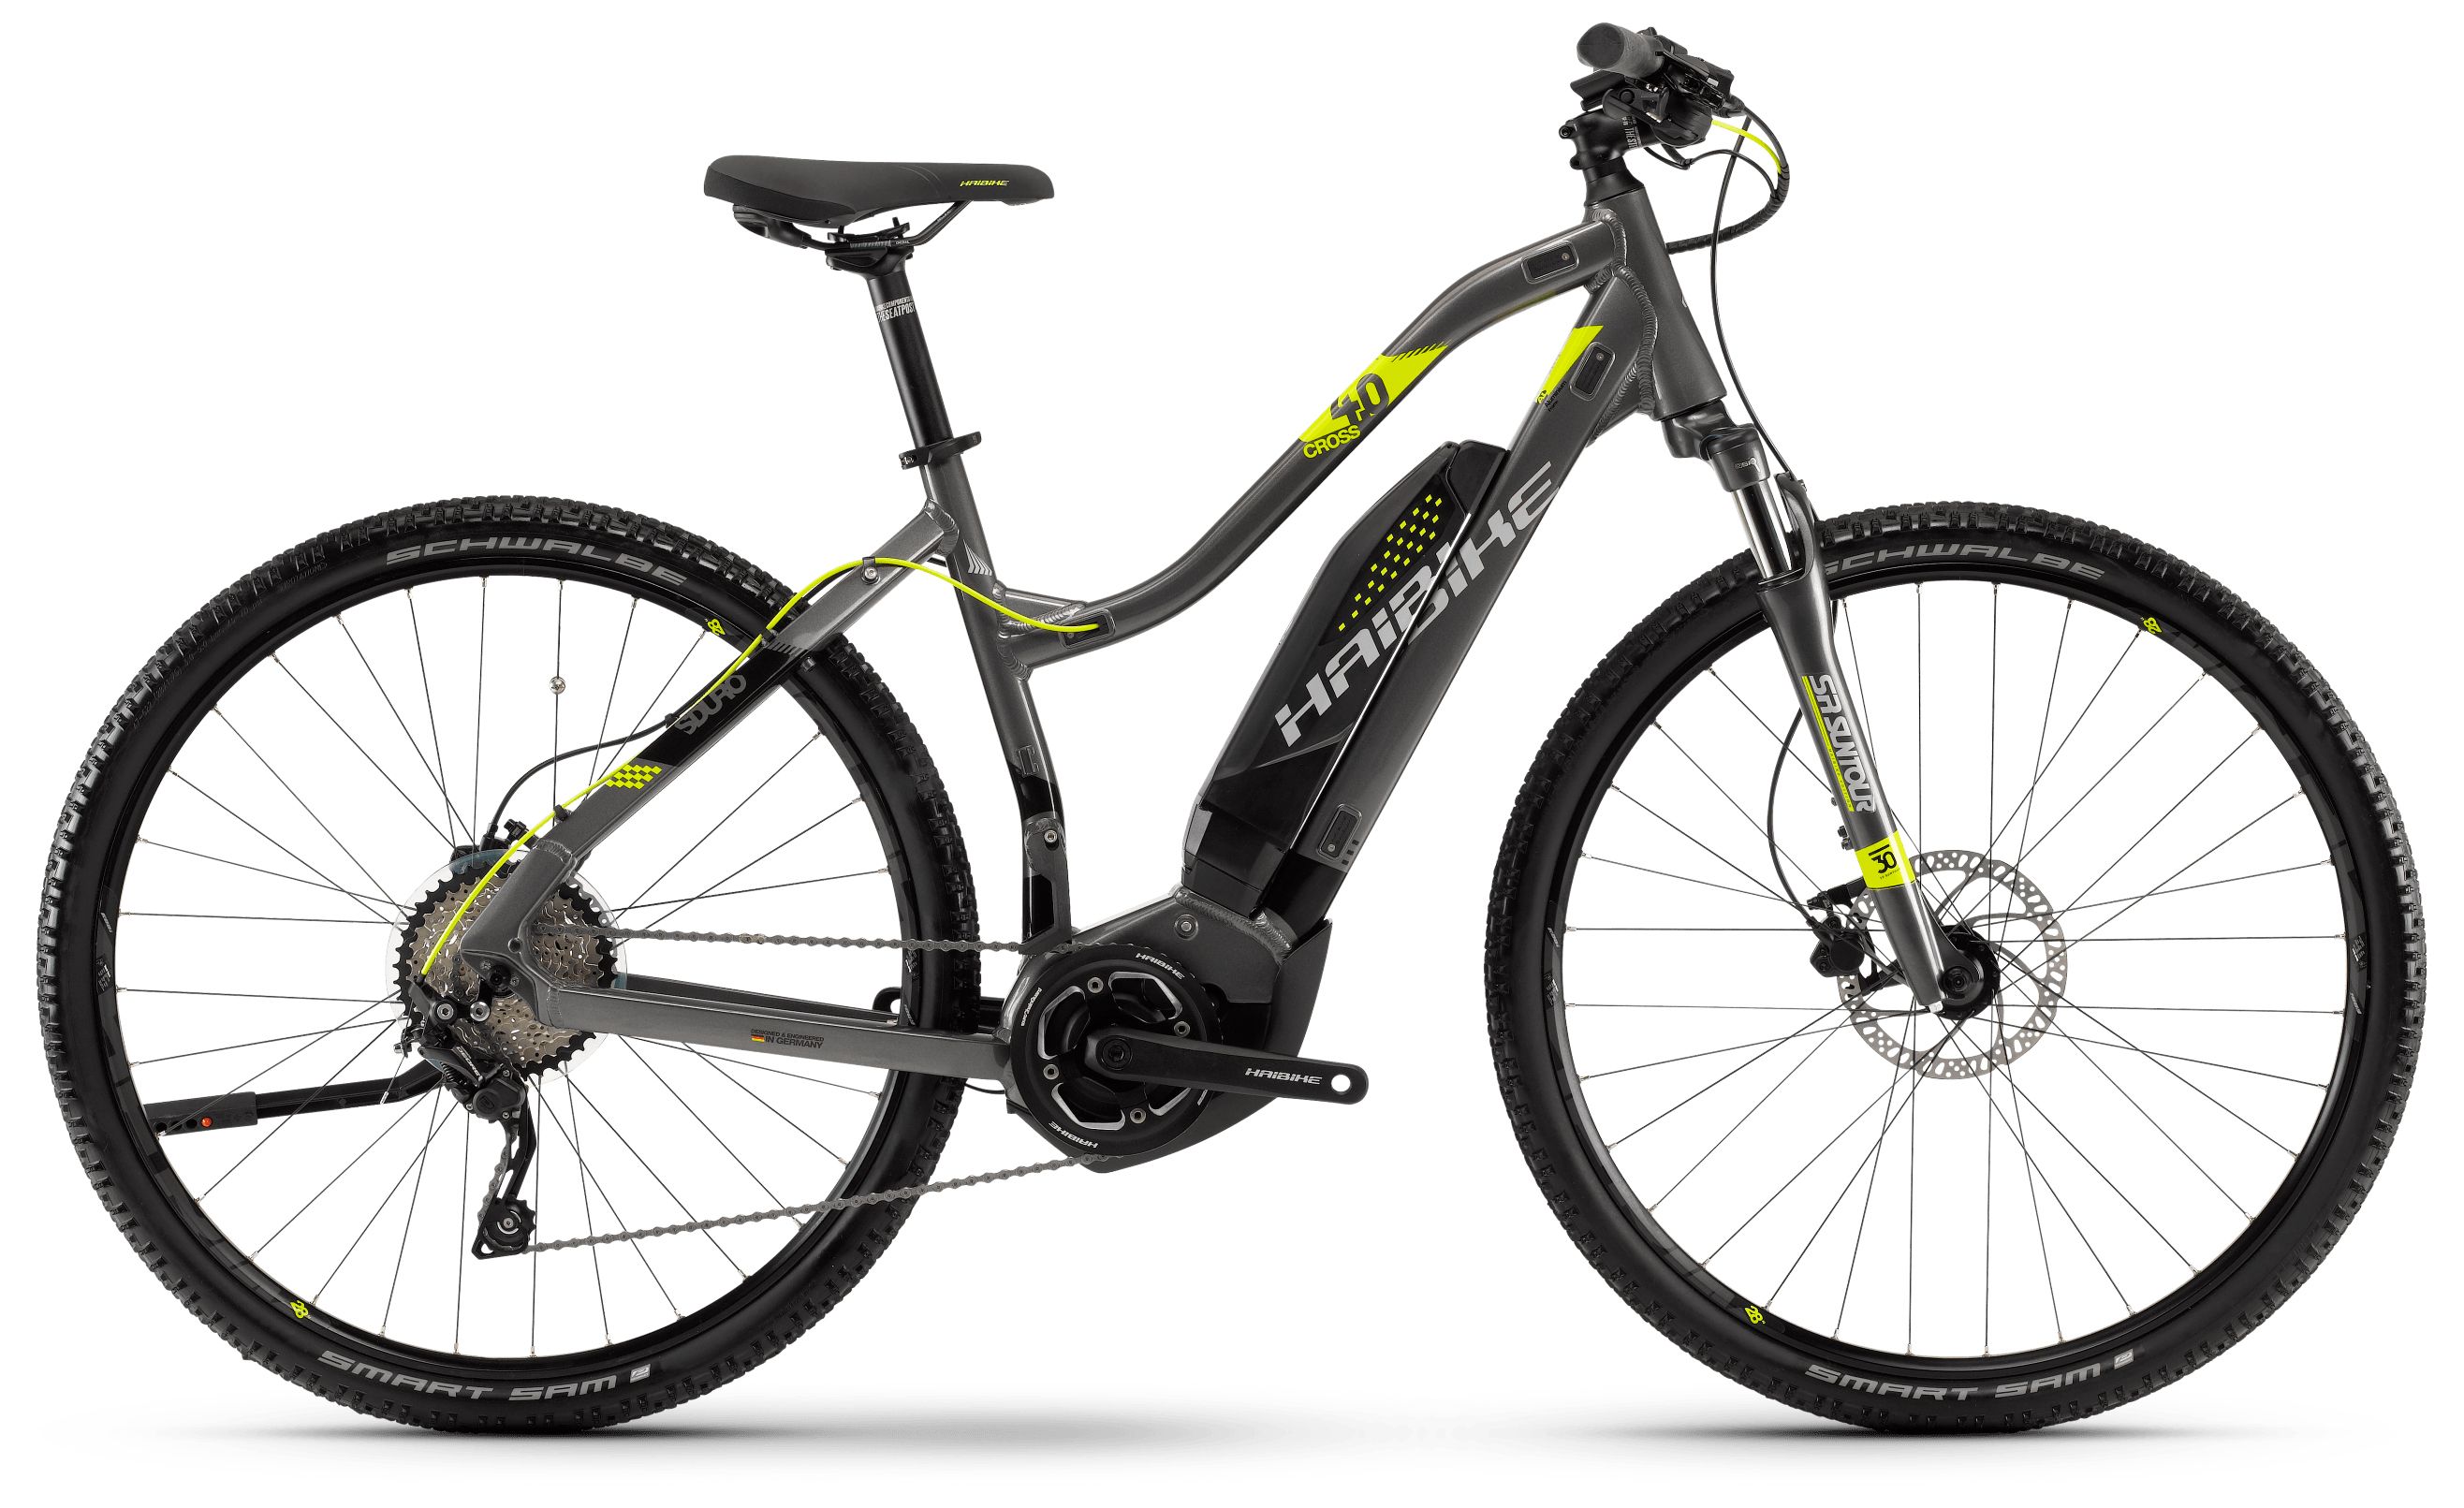  Велосипед Haibike Sduro Cross 4.0 women 400Wh 10s Deore 2018